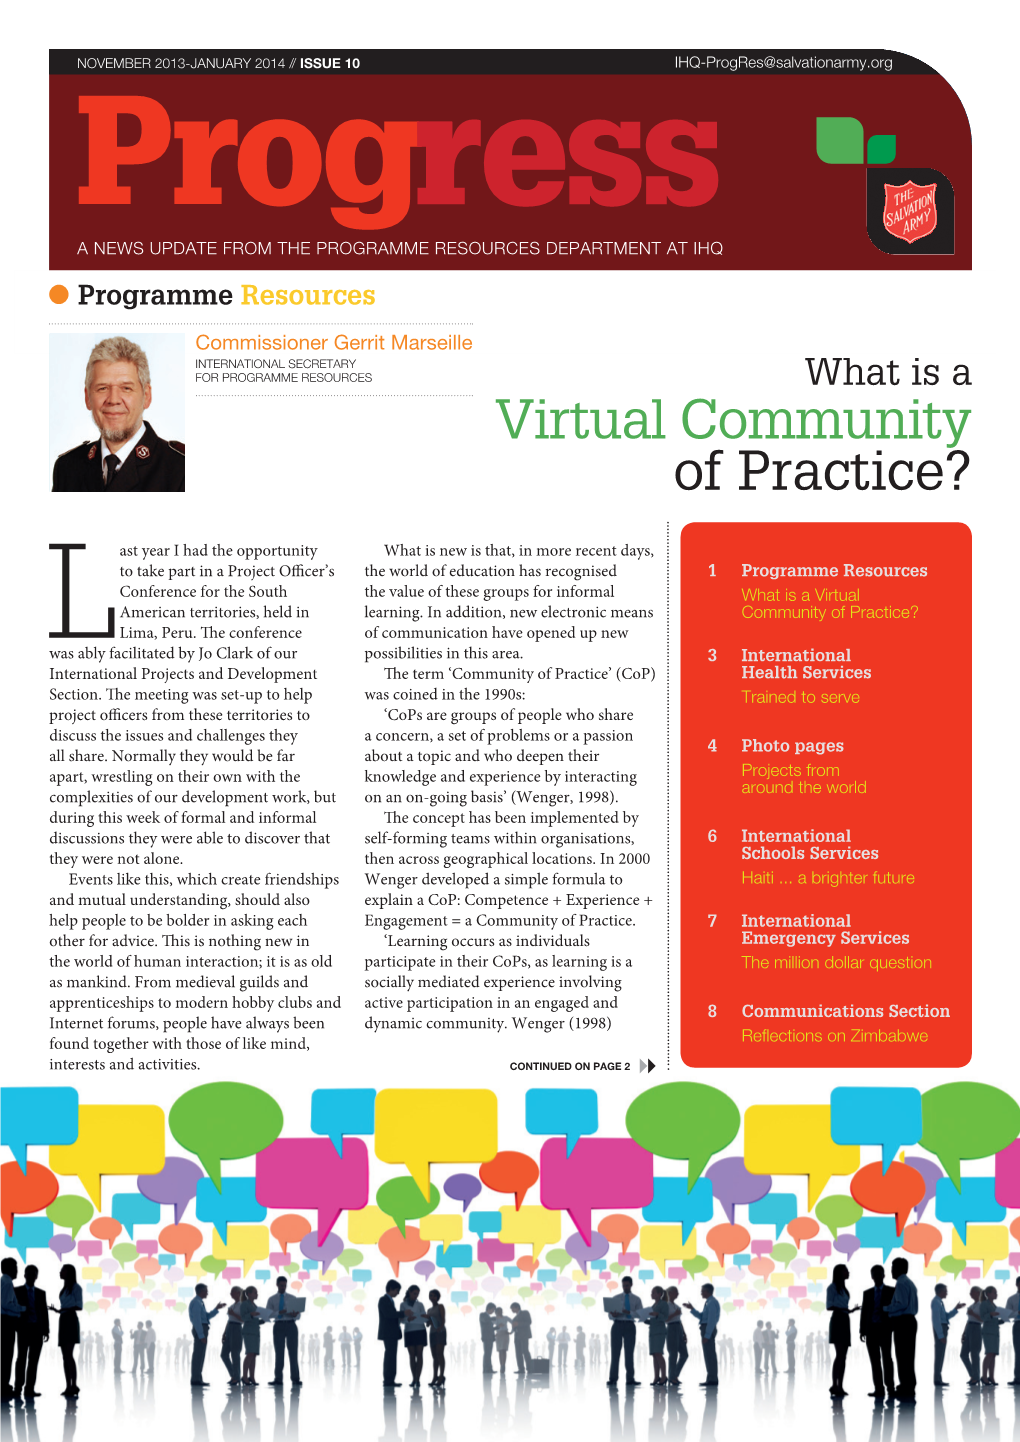 Virtual Community of Practice?